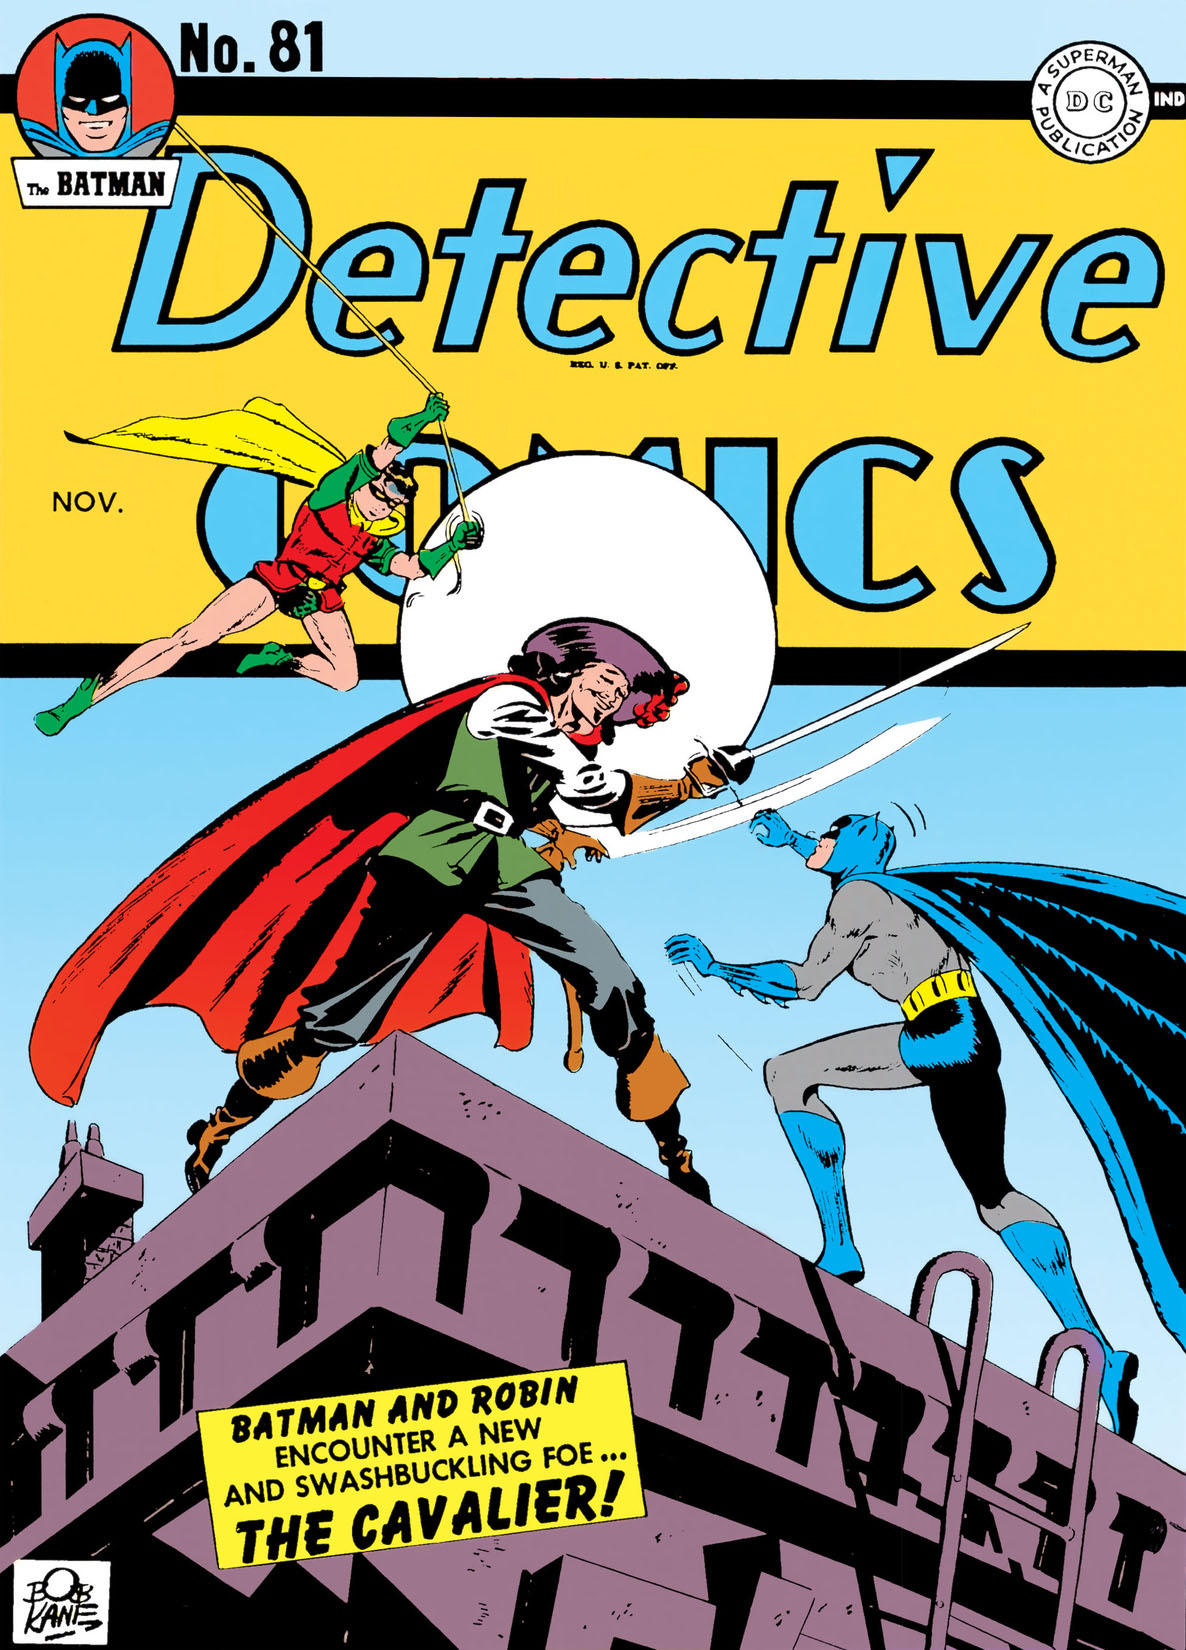 Detective Comics (1942-) #81 preview images